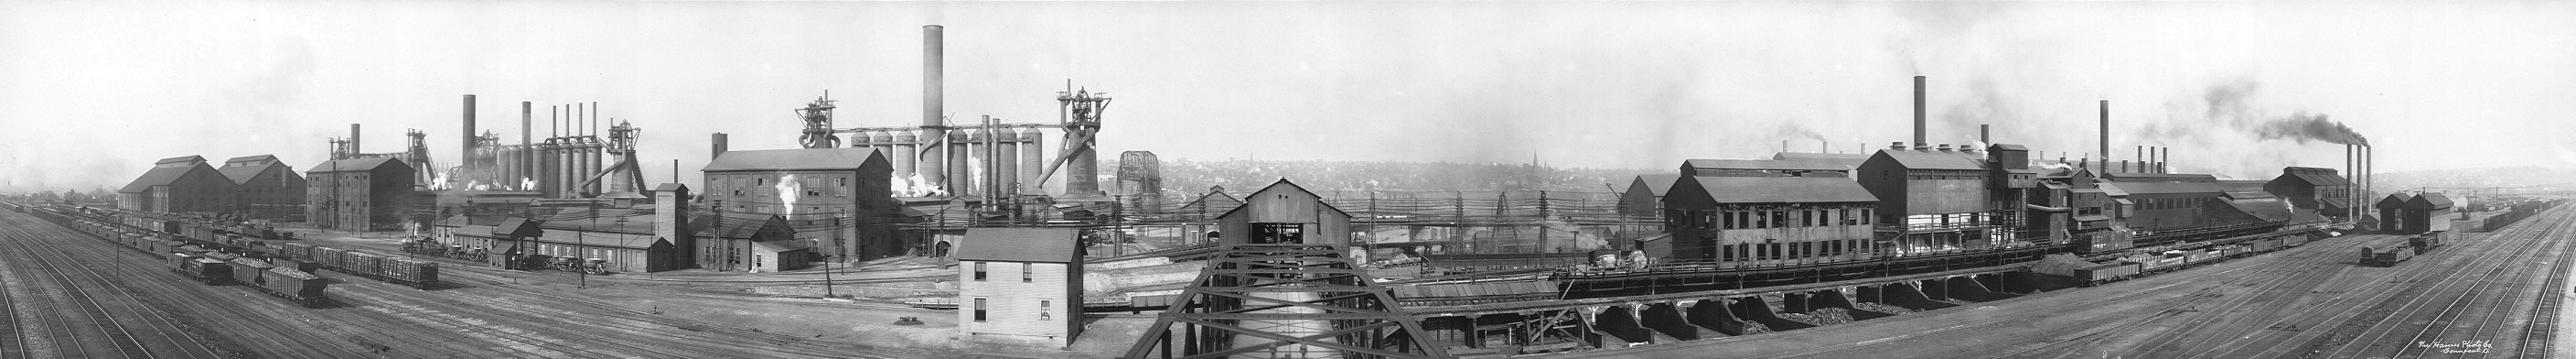 Carnegie Steel Works, Youngstown, Ohio, 1910